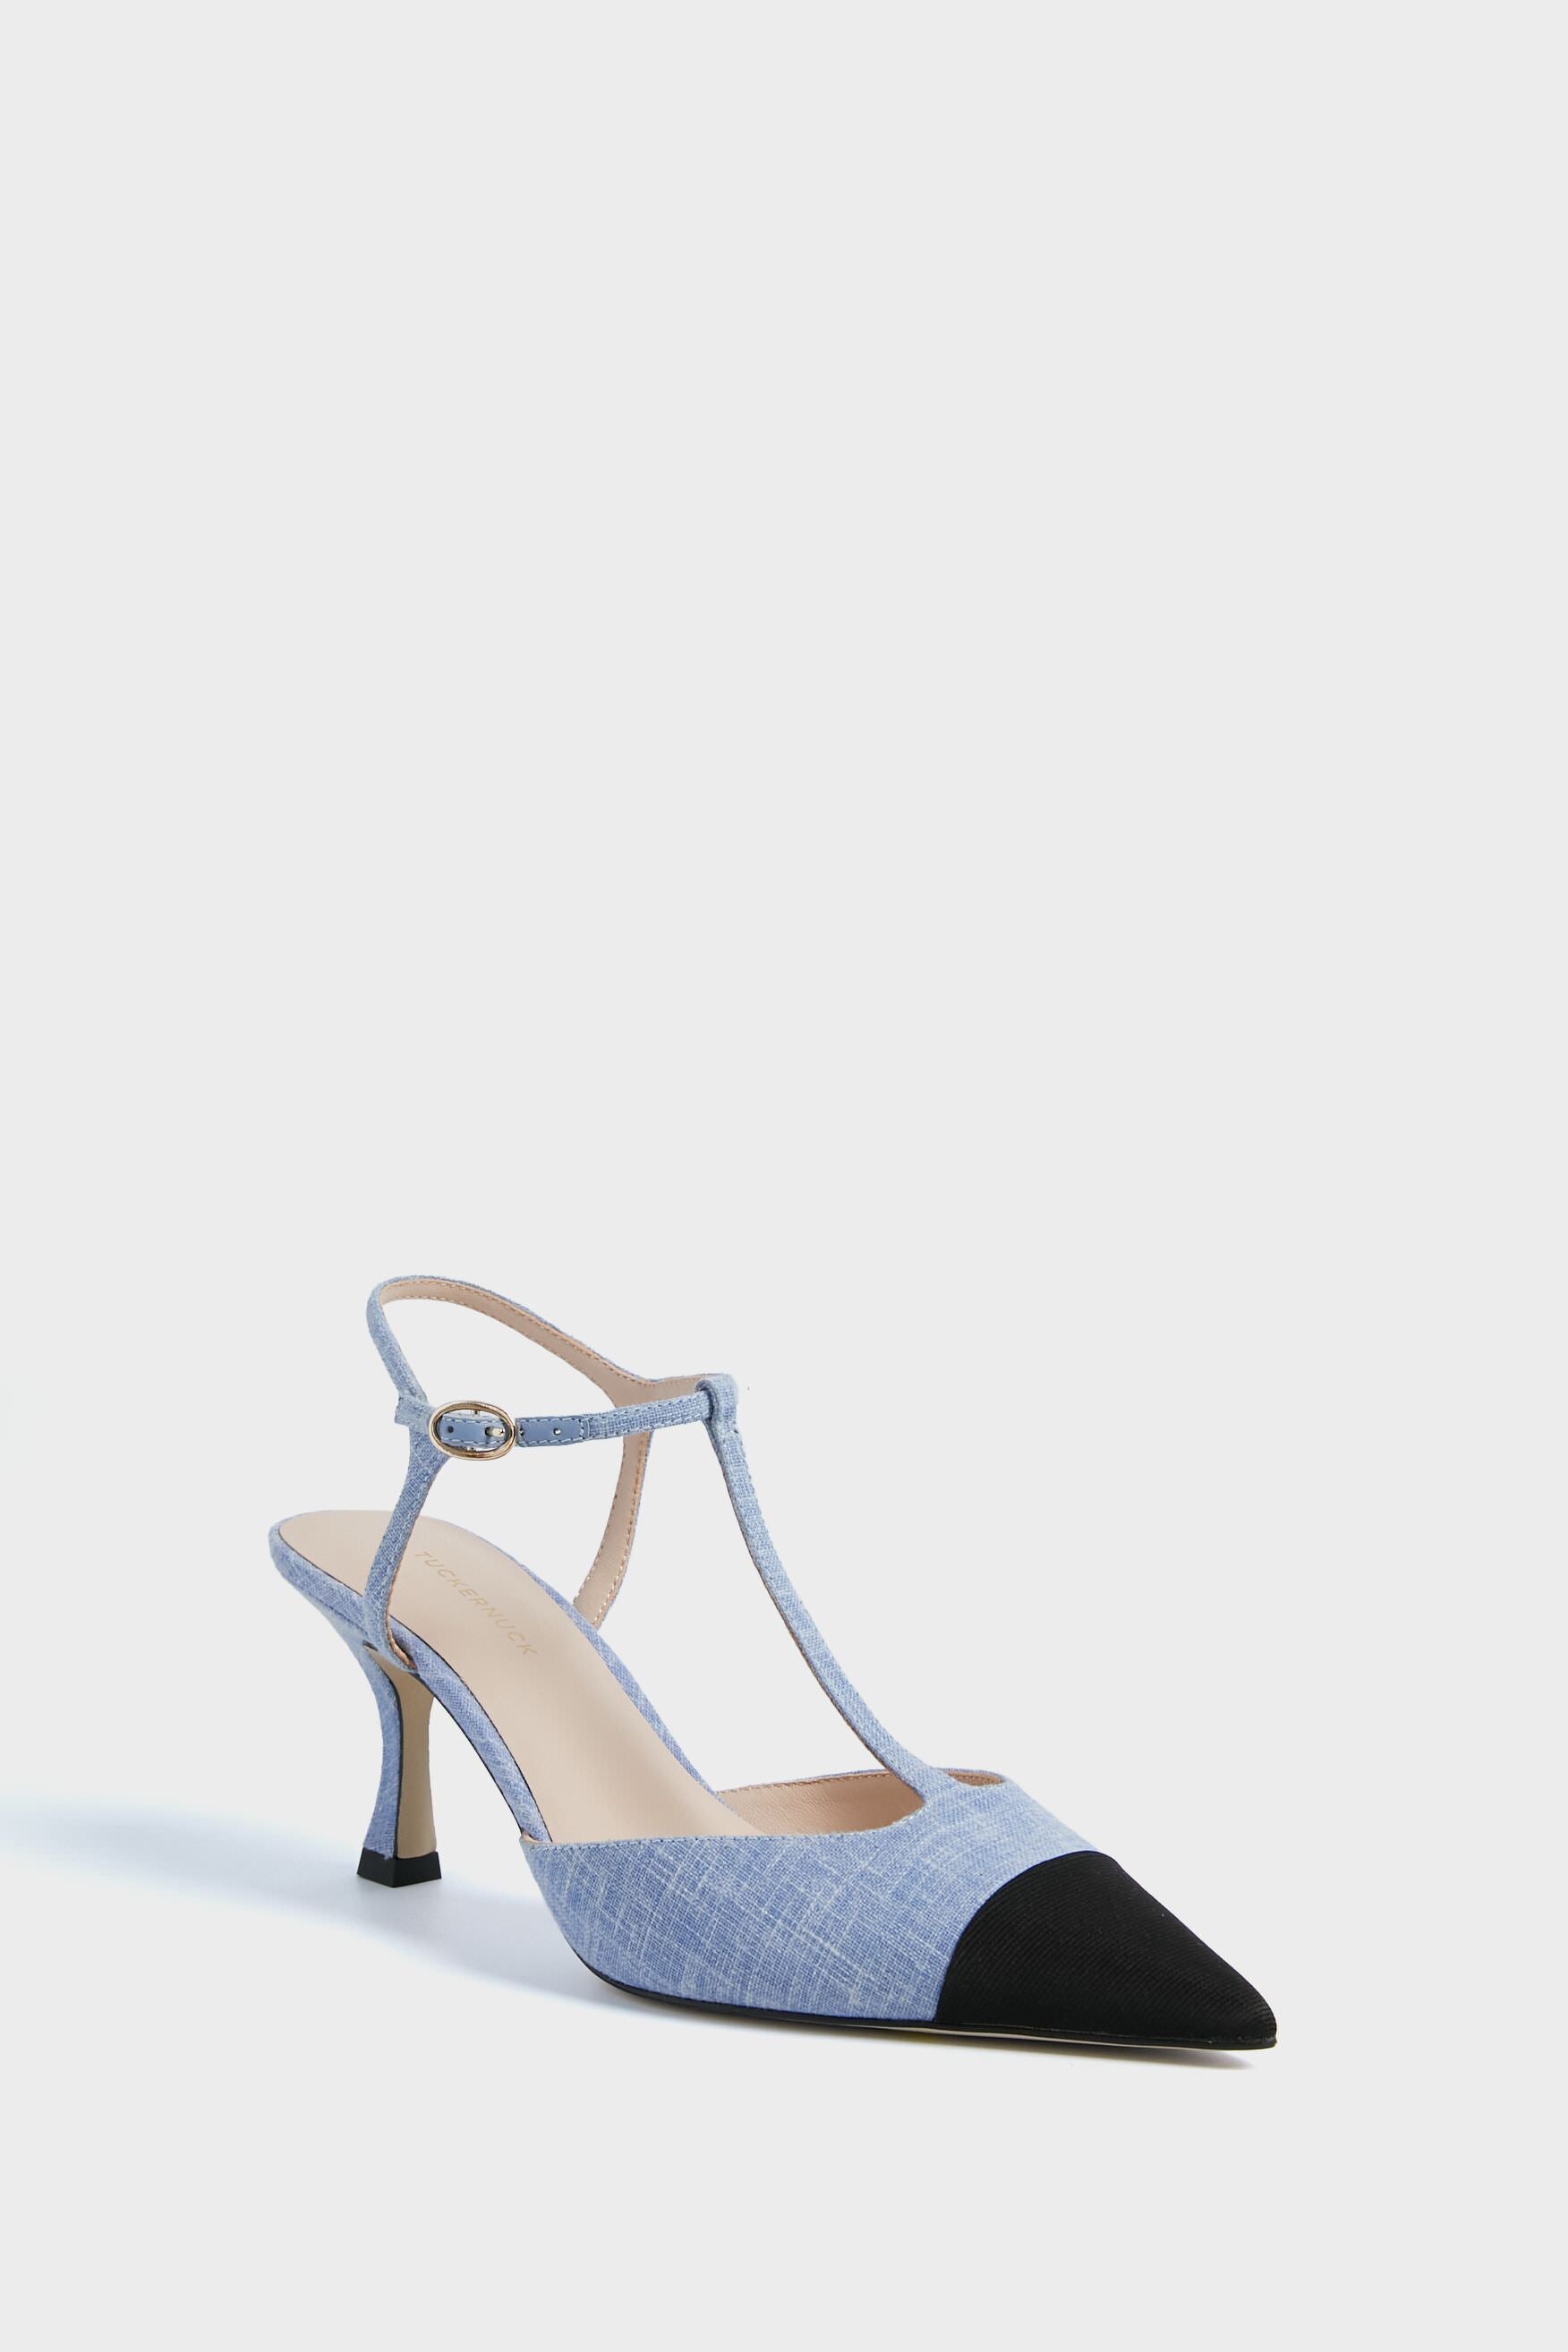 Chambray Margot Heels | Tuckernuck Shoes